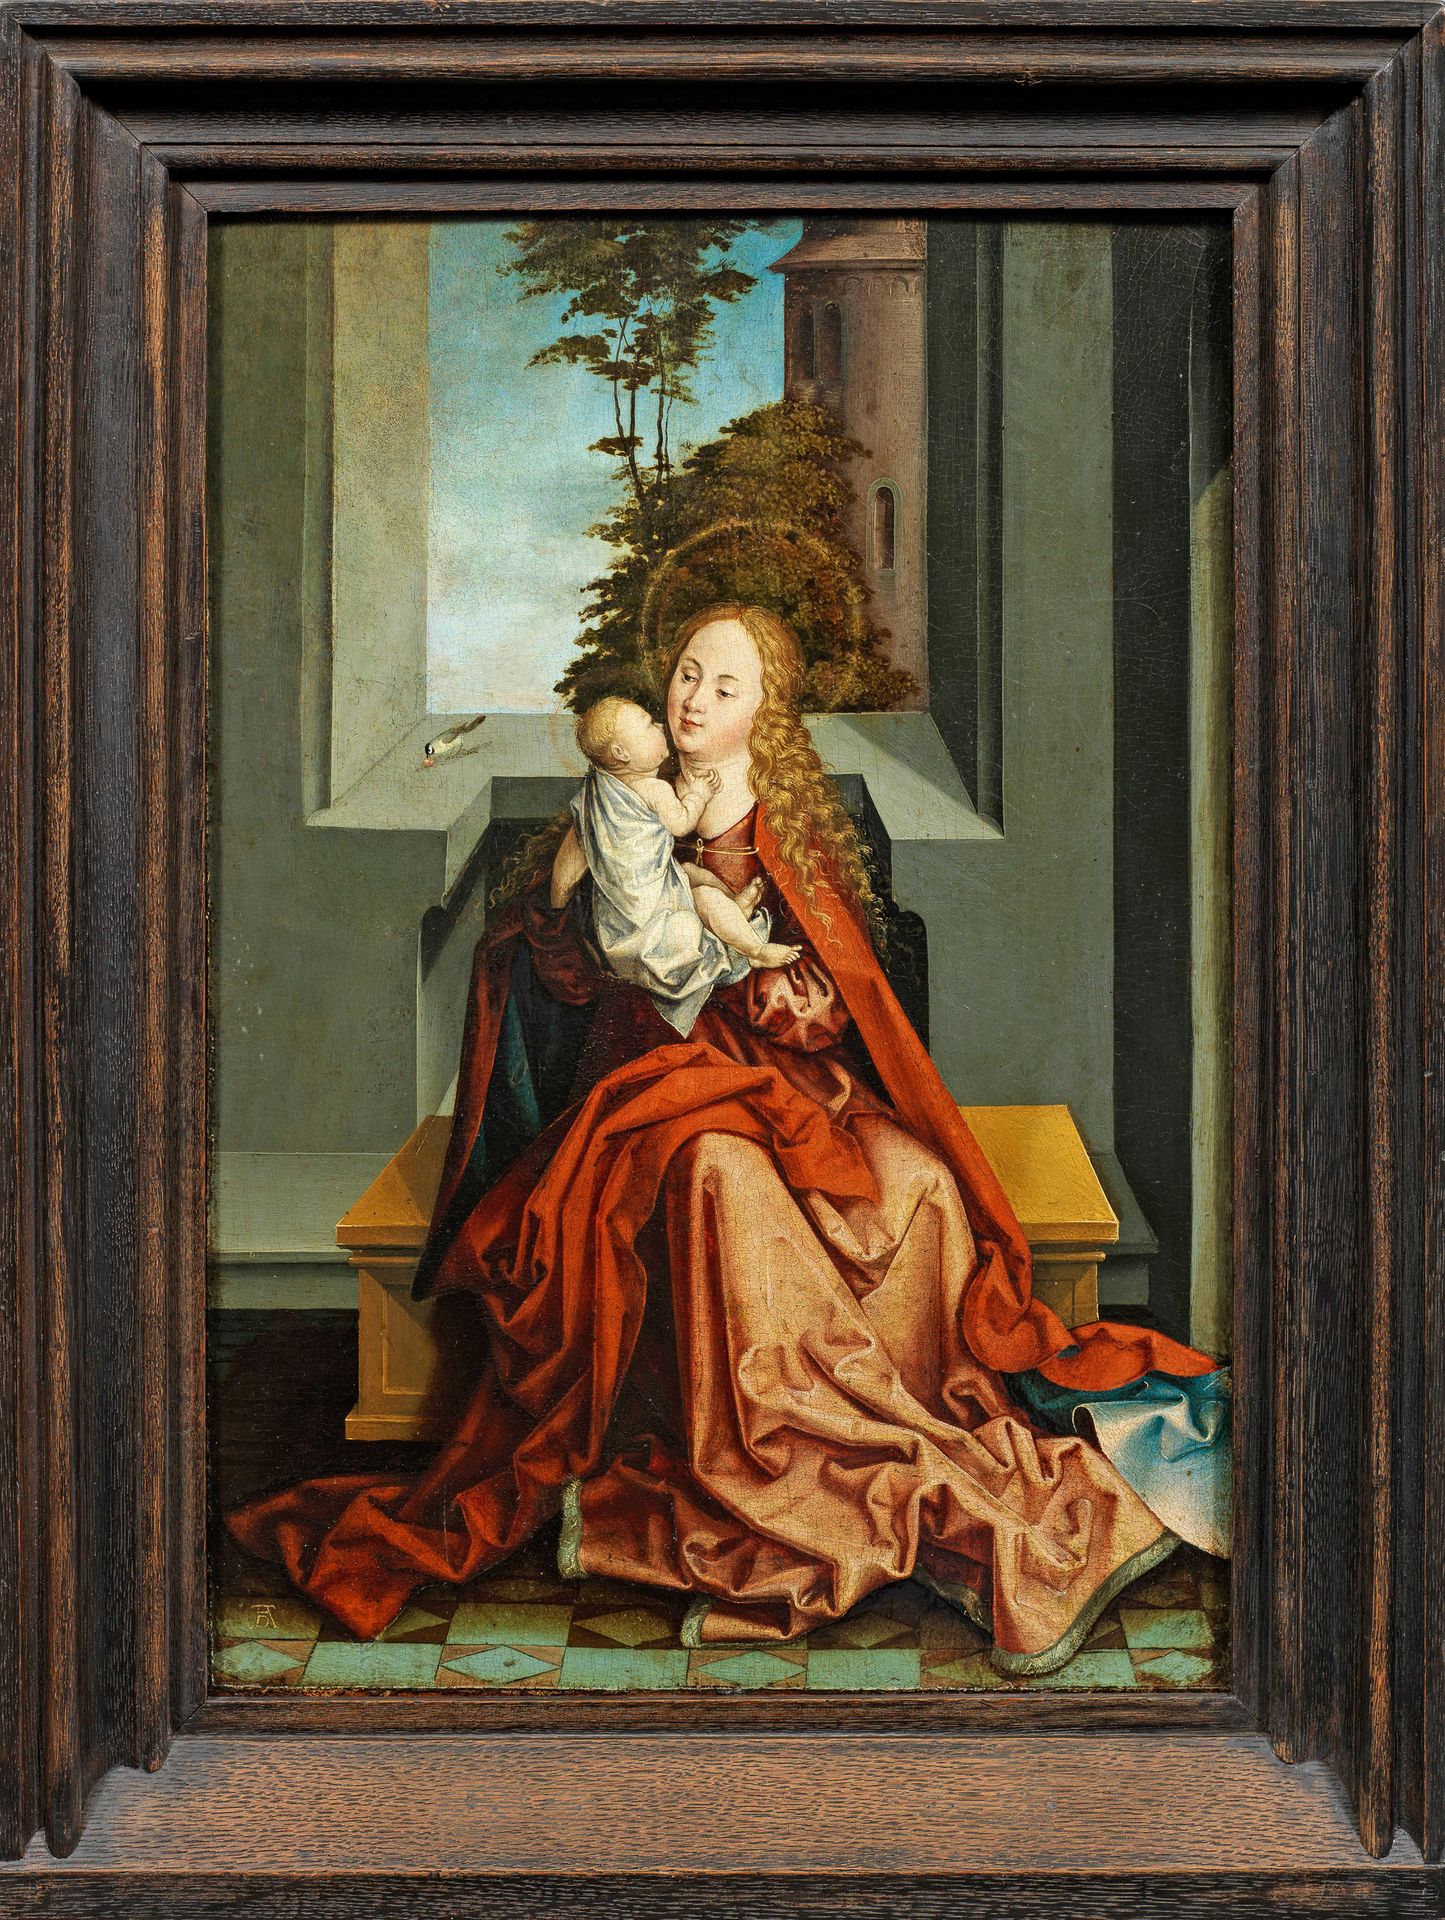 Null 丢勒文艺复兴时期的德国或佛兰德画家
(活跃于 1600 年前后）
圣母
玛利亚坐在窗凹处的长凳上，身着红色长裙和蓝红相间的斗篷，右颊抱着孩子；窗台上有&hellip;